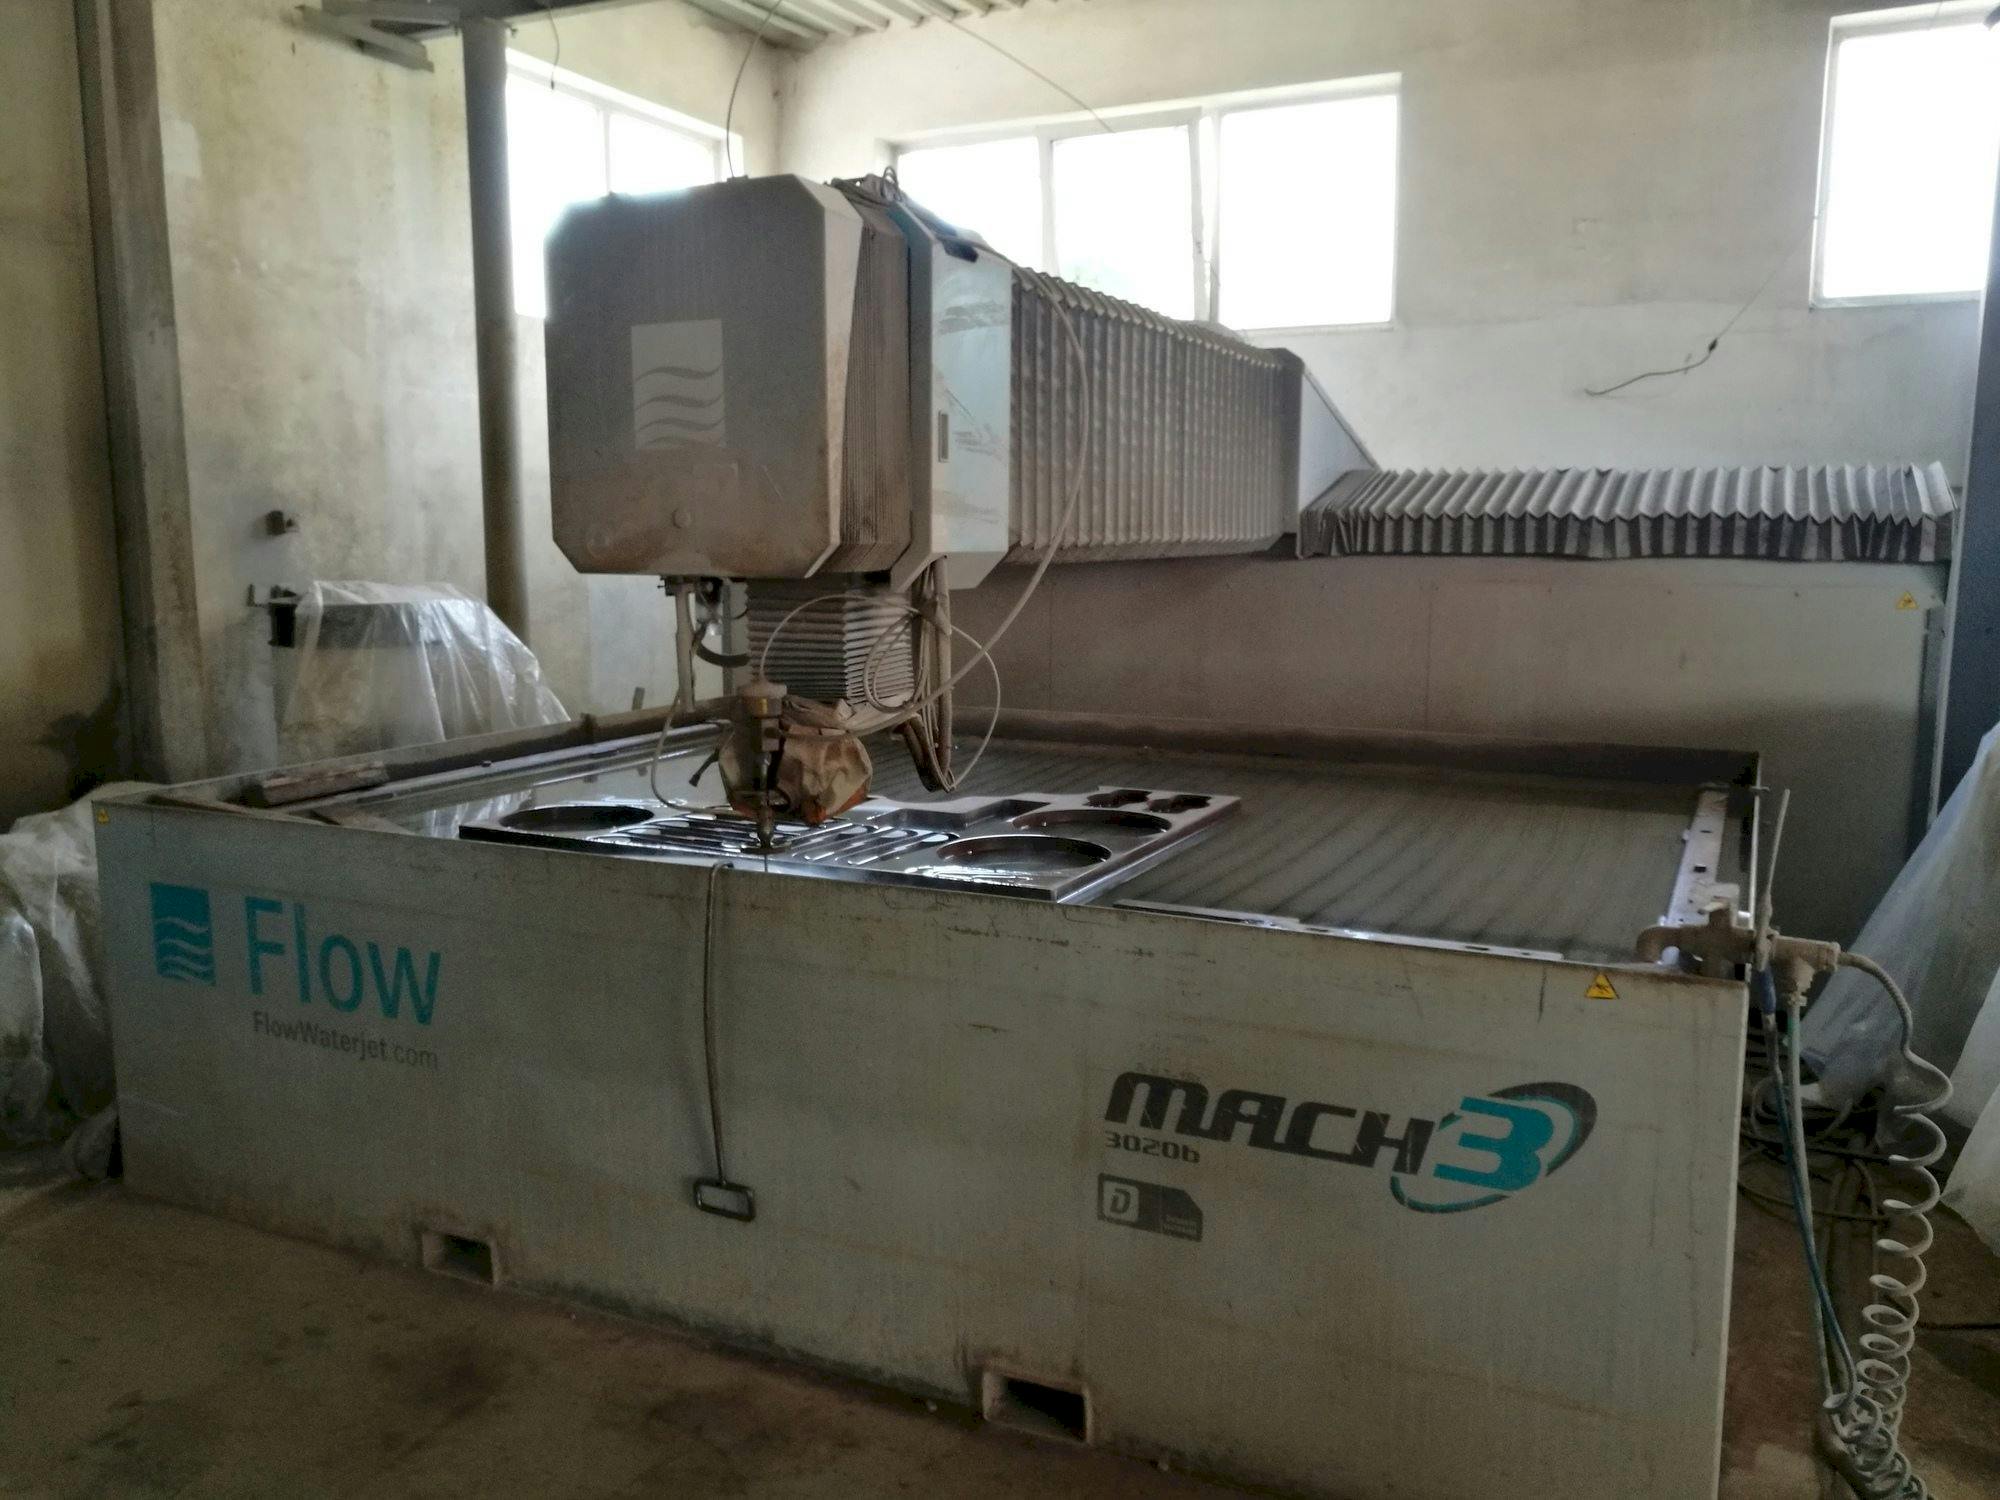 Flow Mach3-3020b-maskinen framifrån